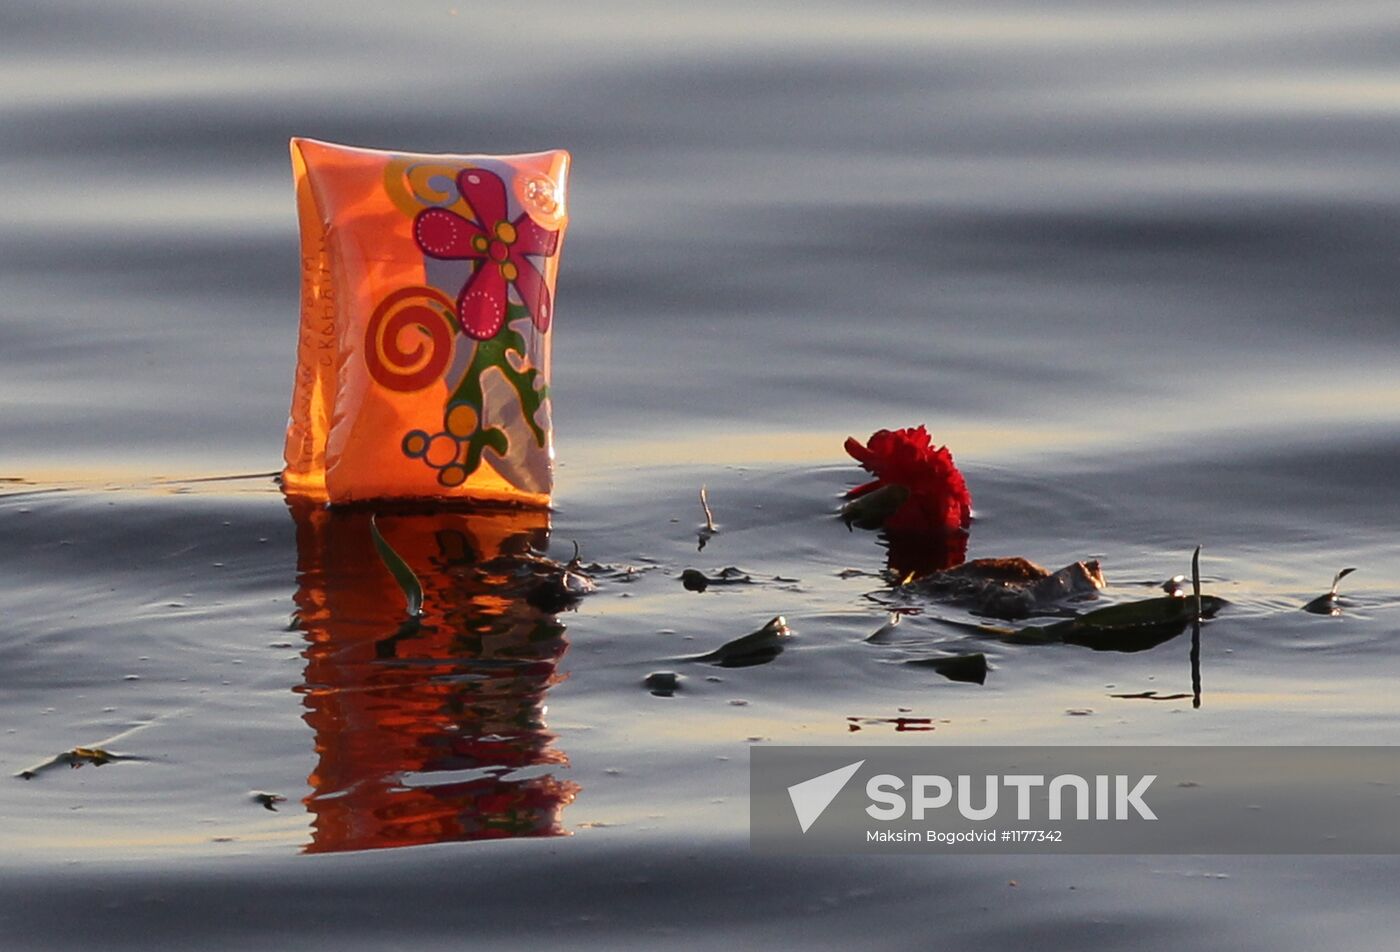 Gathering at Kazan river port in memory of Bulgaria victims